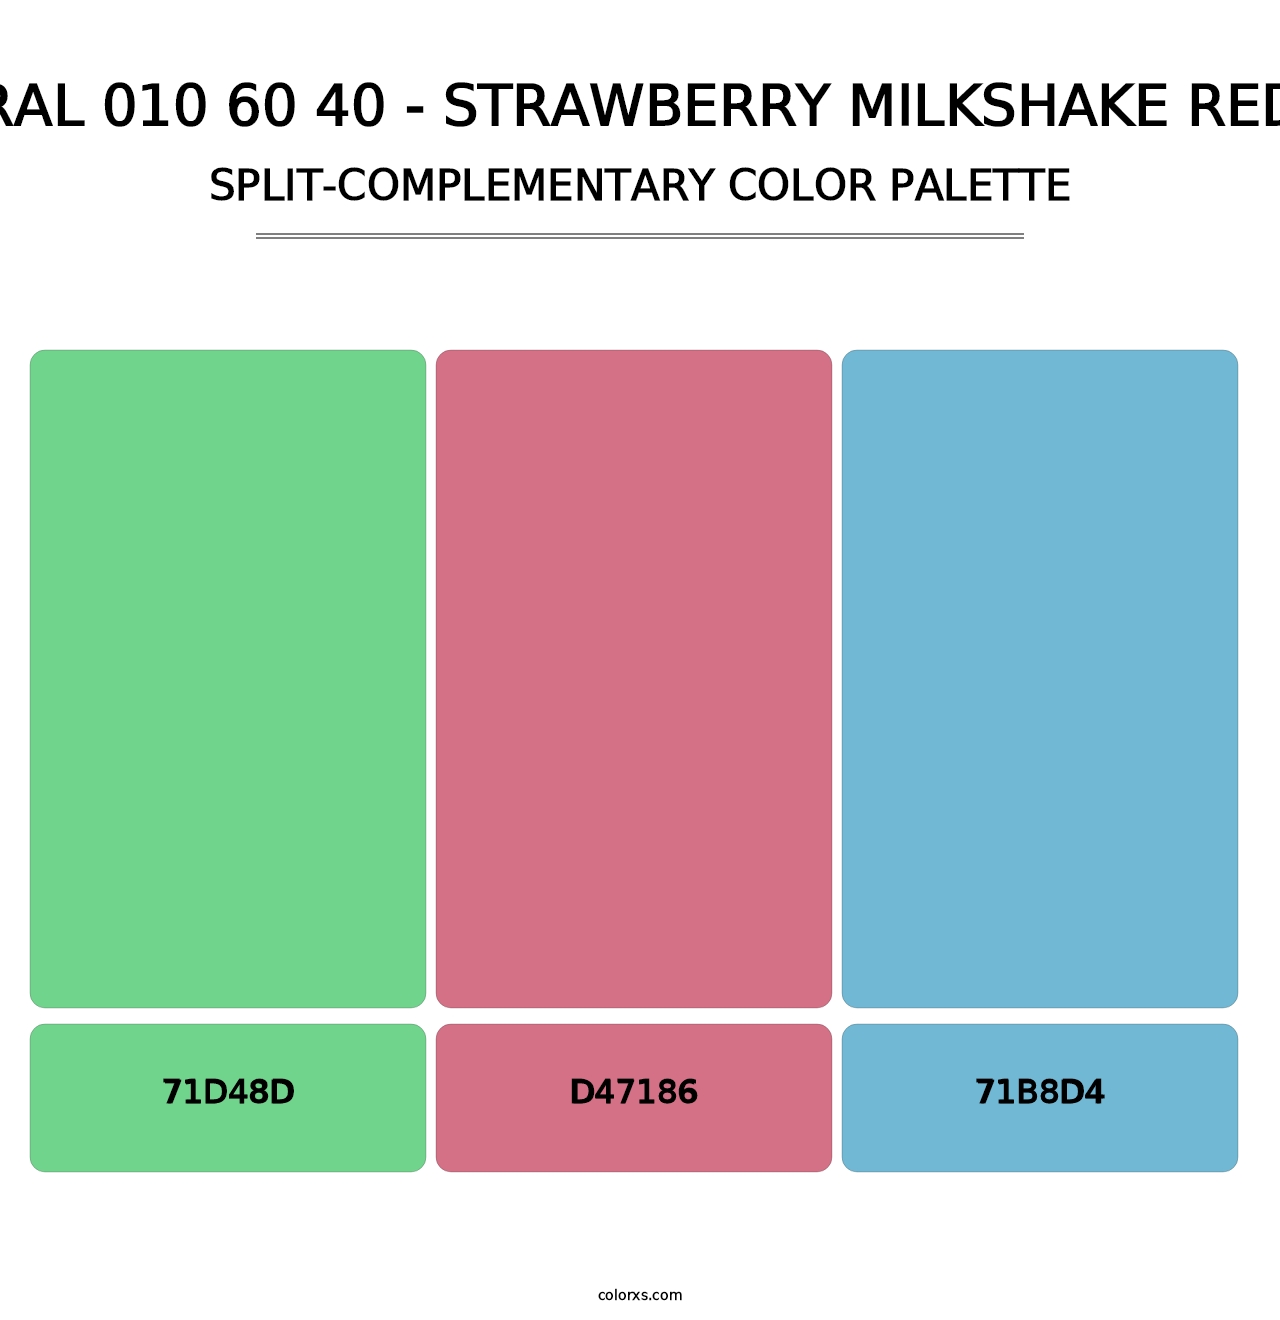 RAL 010 60 40 - Strawberry Milkshake Red - Split-Complementary Color Palette